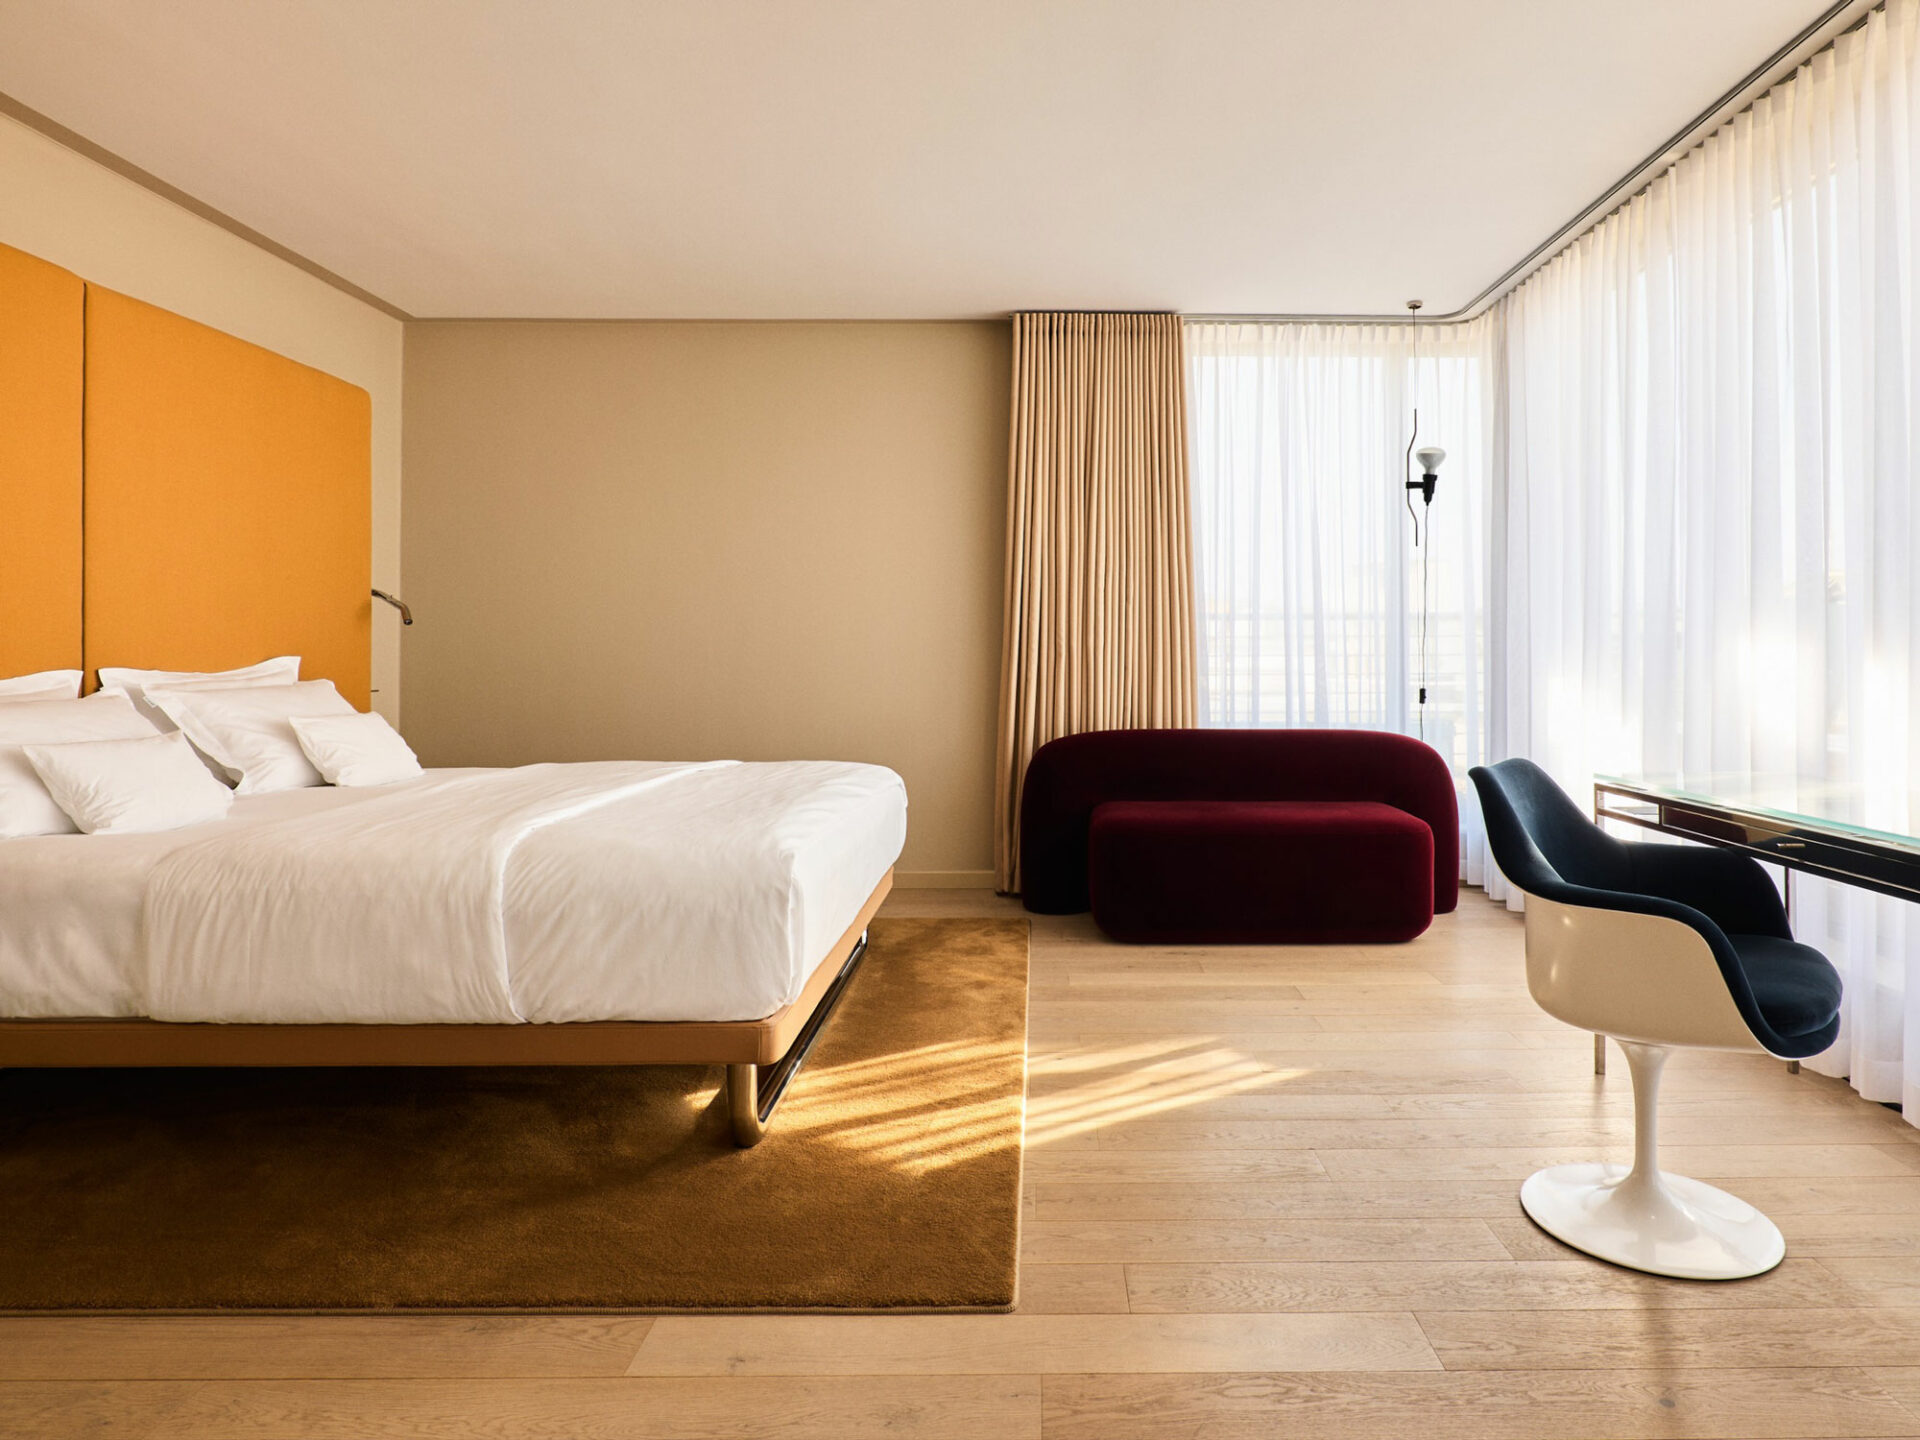 Best Hotel Prague - Hotel Josef Rooms Overview - Hotel Josef